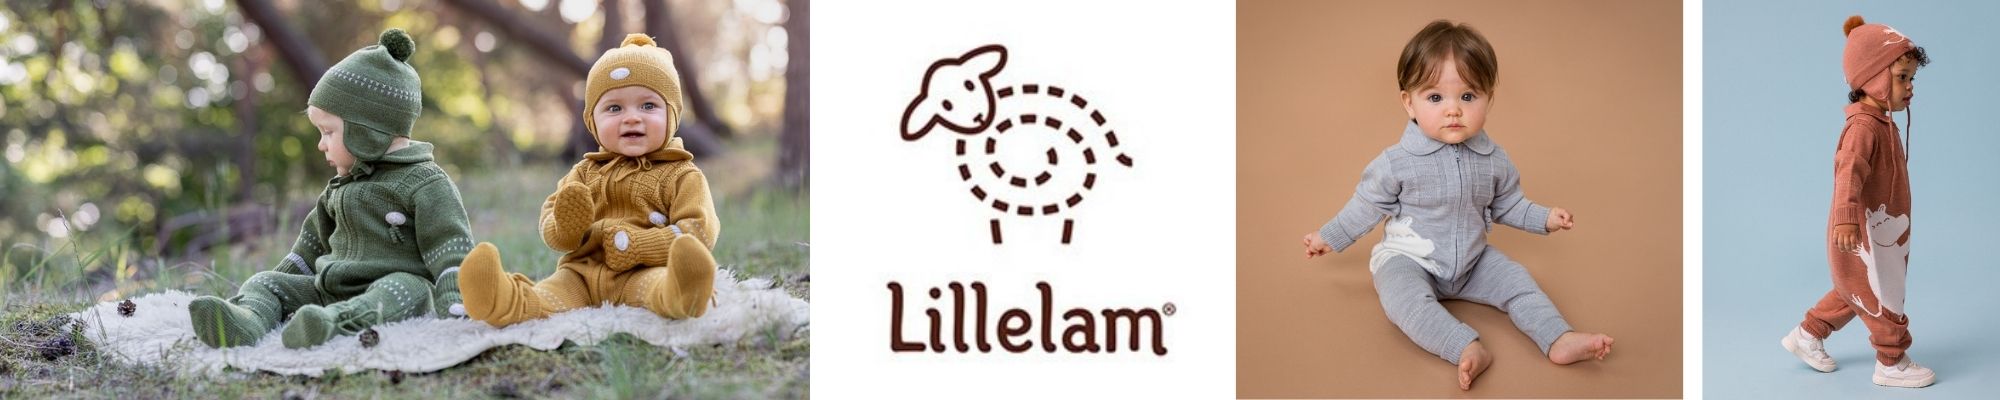 lillelam banner